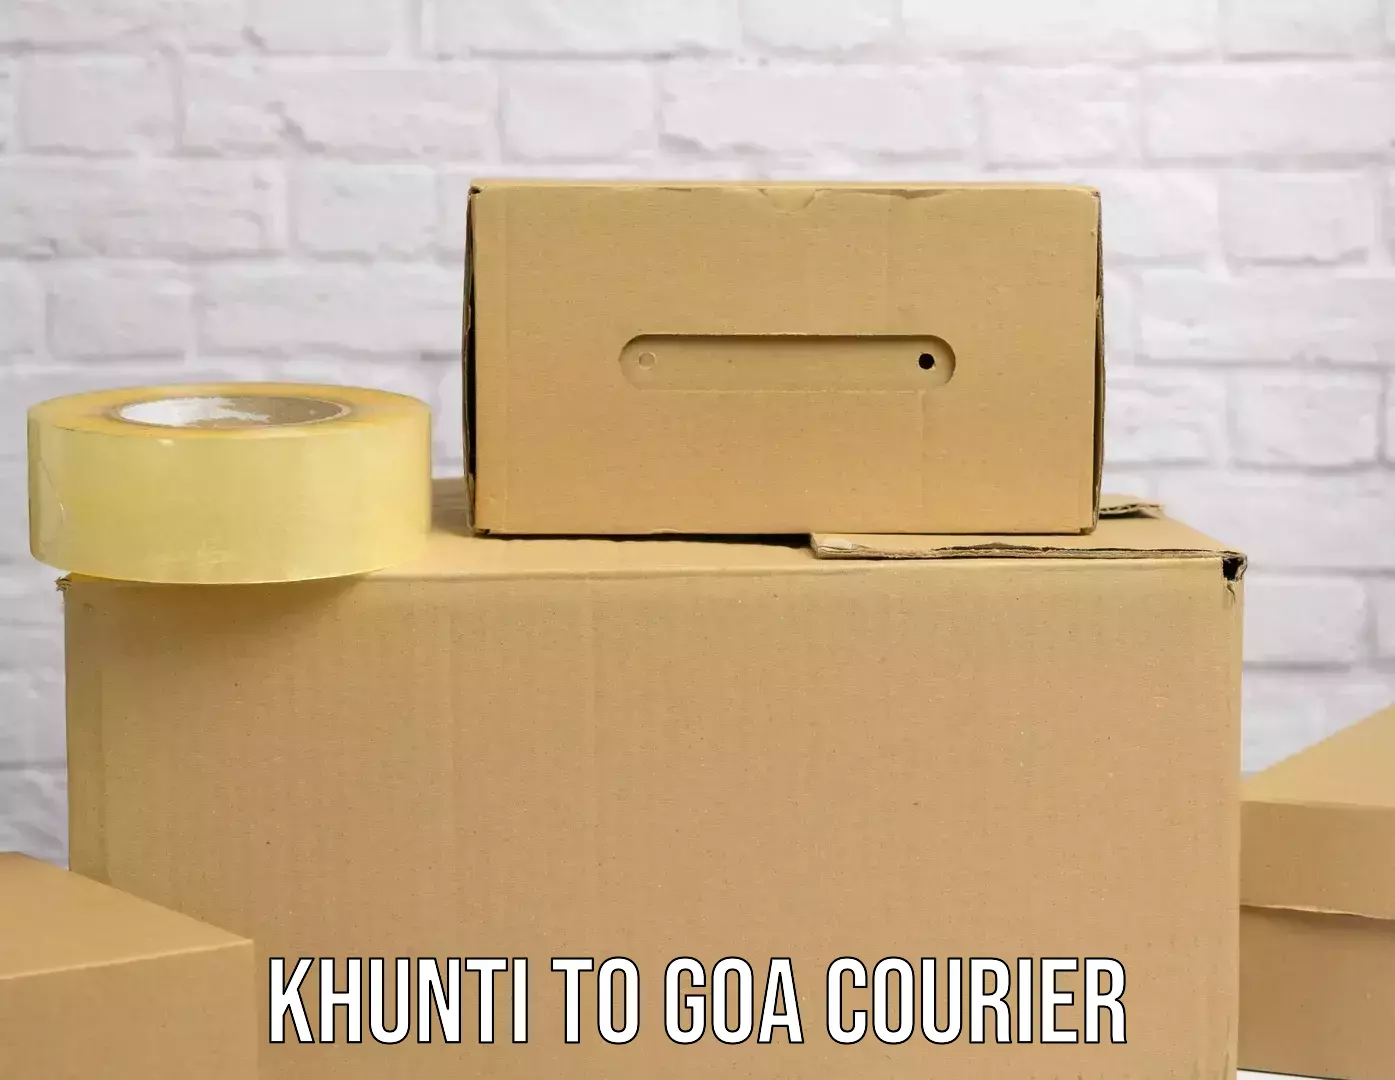 Modern delivery methods Khunti to Panaji